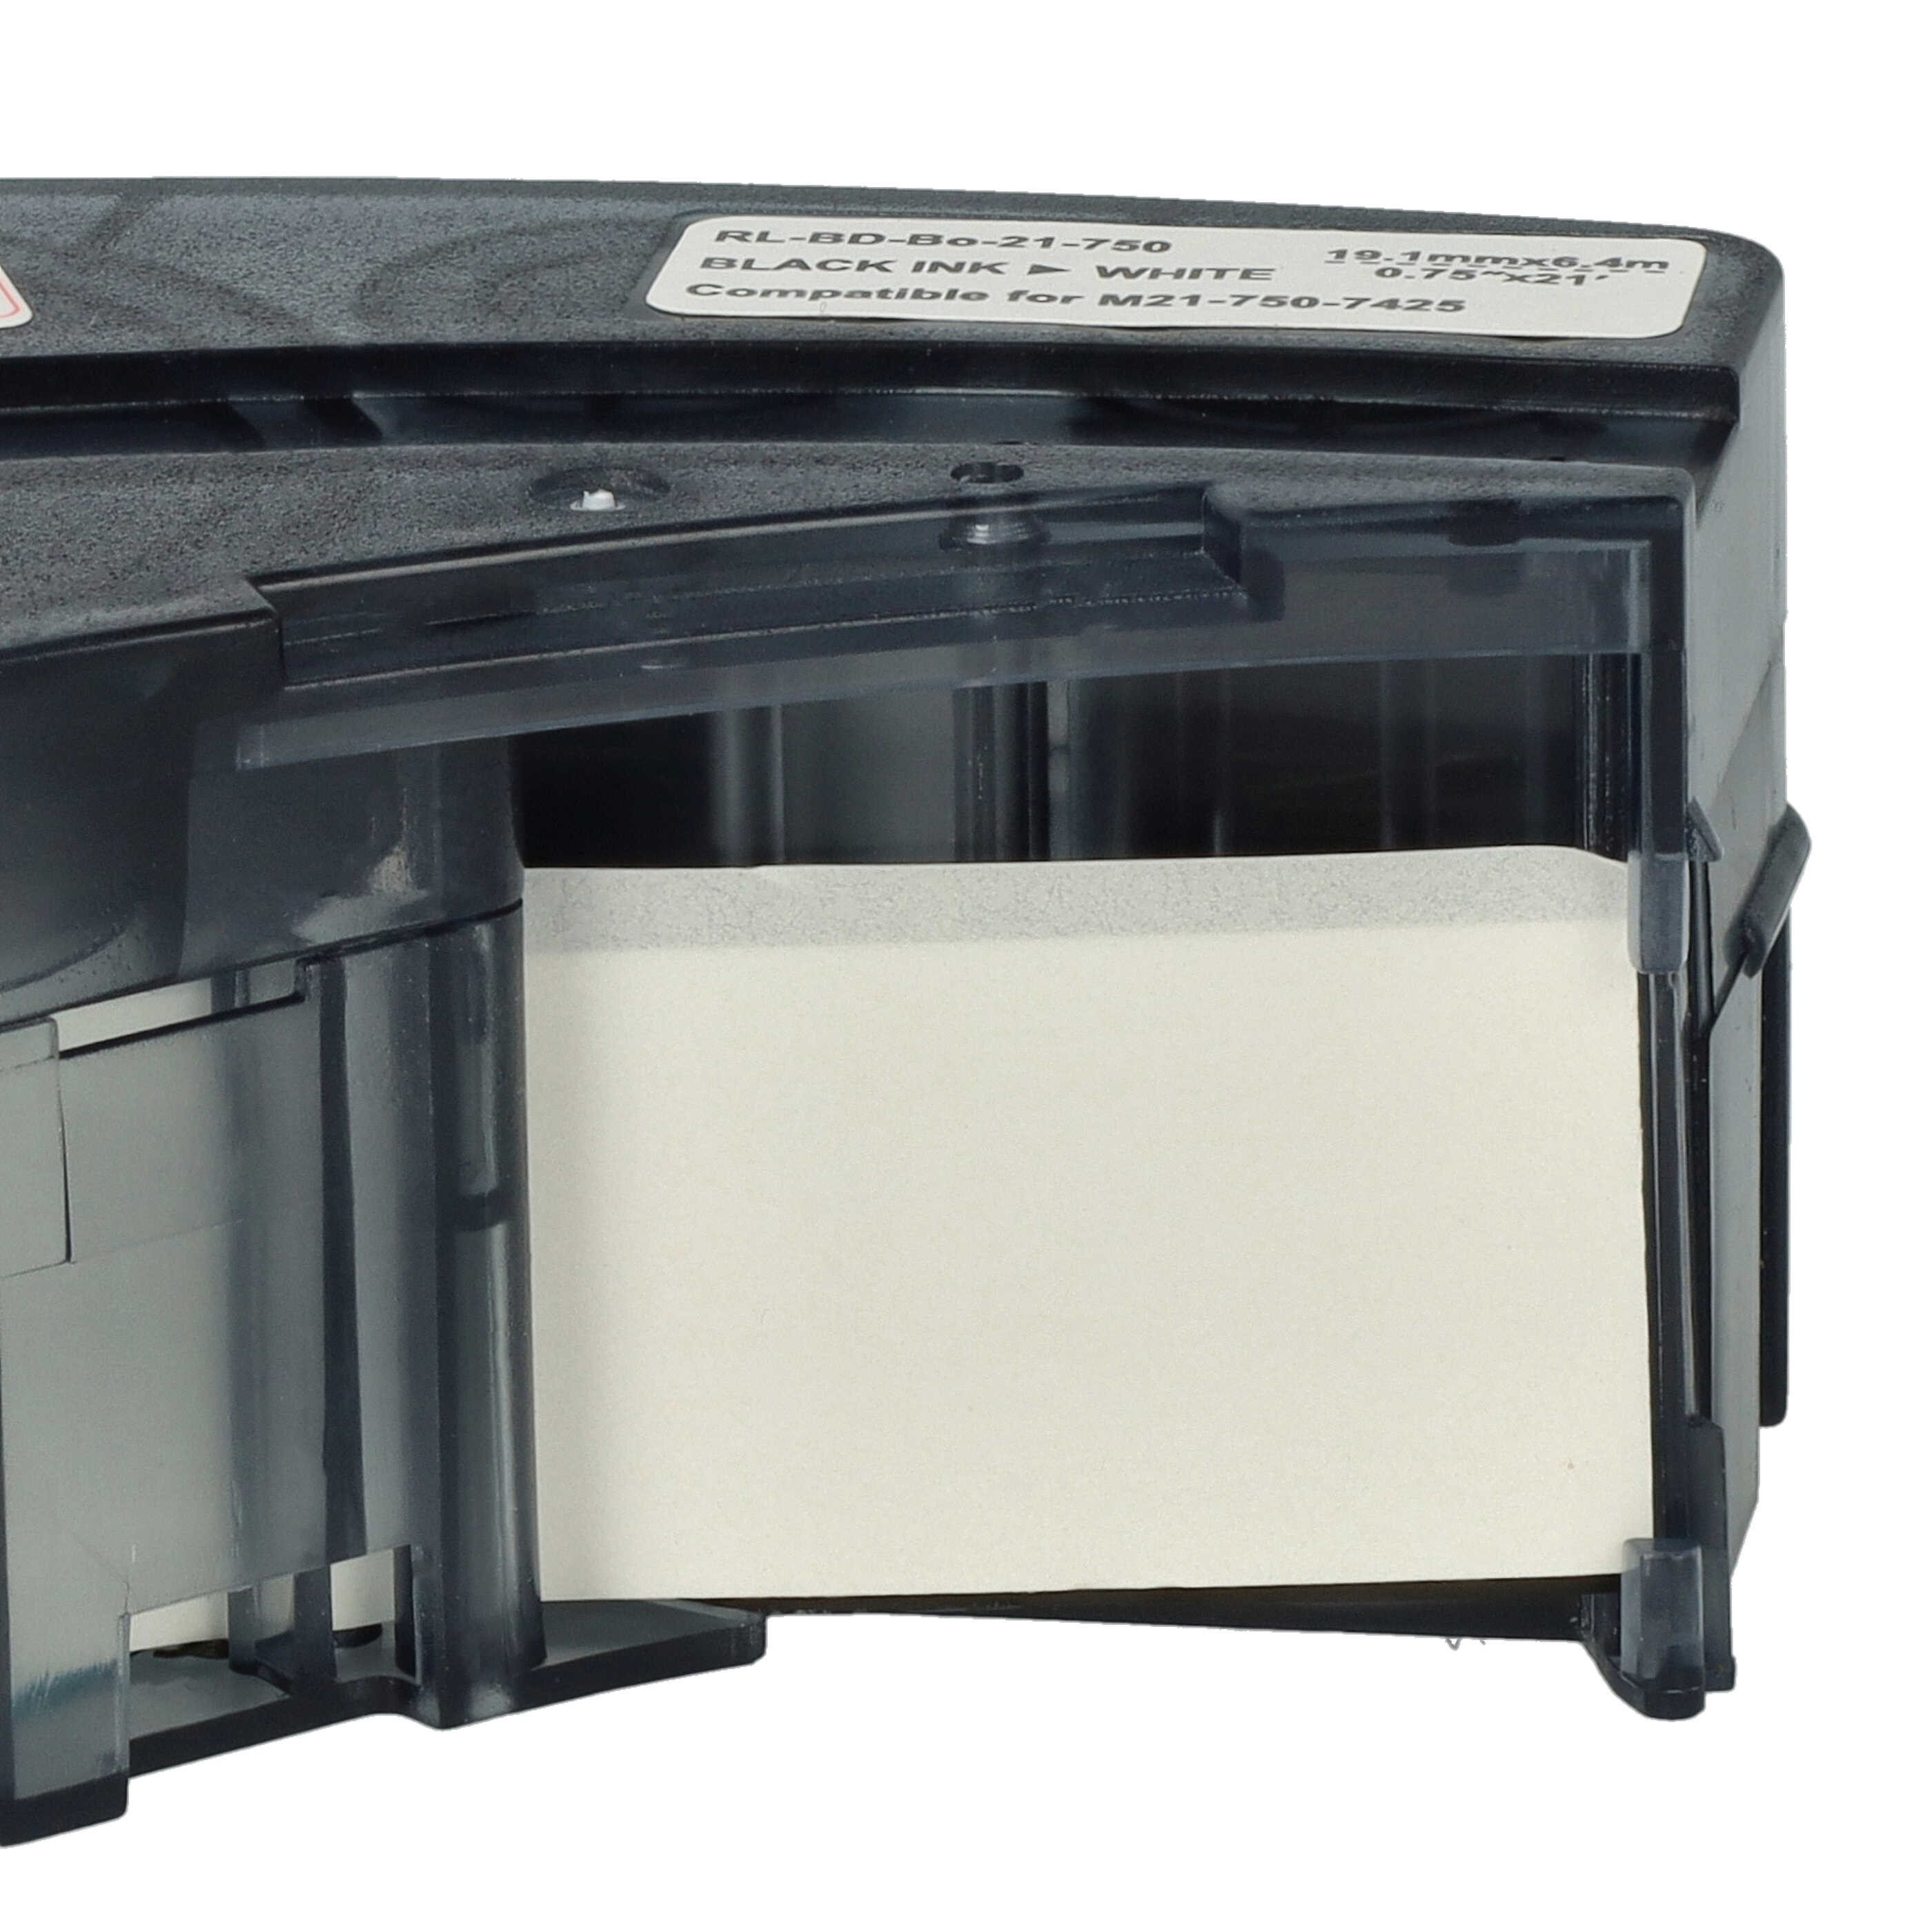 3x Casete cinta escritura reemplaza Brady M21-750-7425 Negro su Blanco